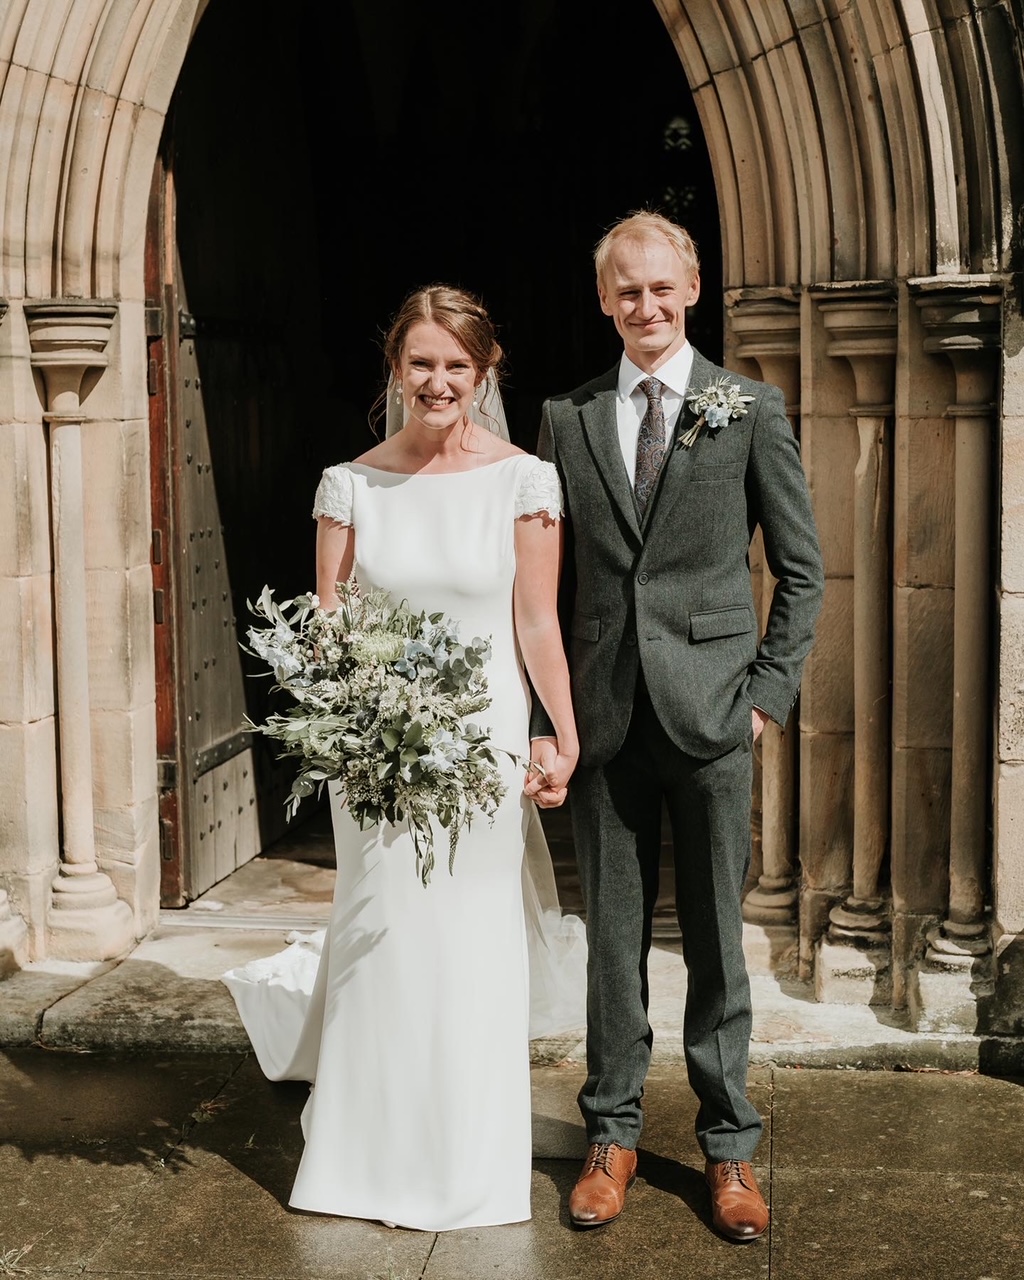 Newly weds outside Rothbury church